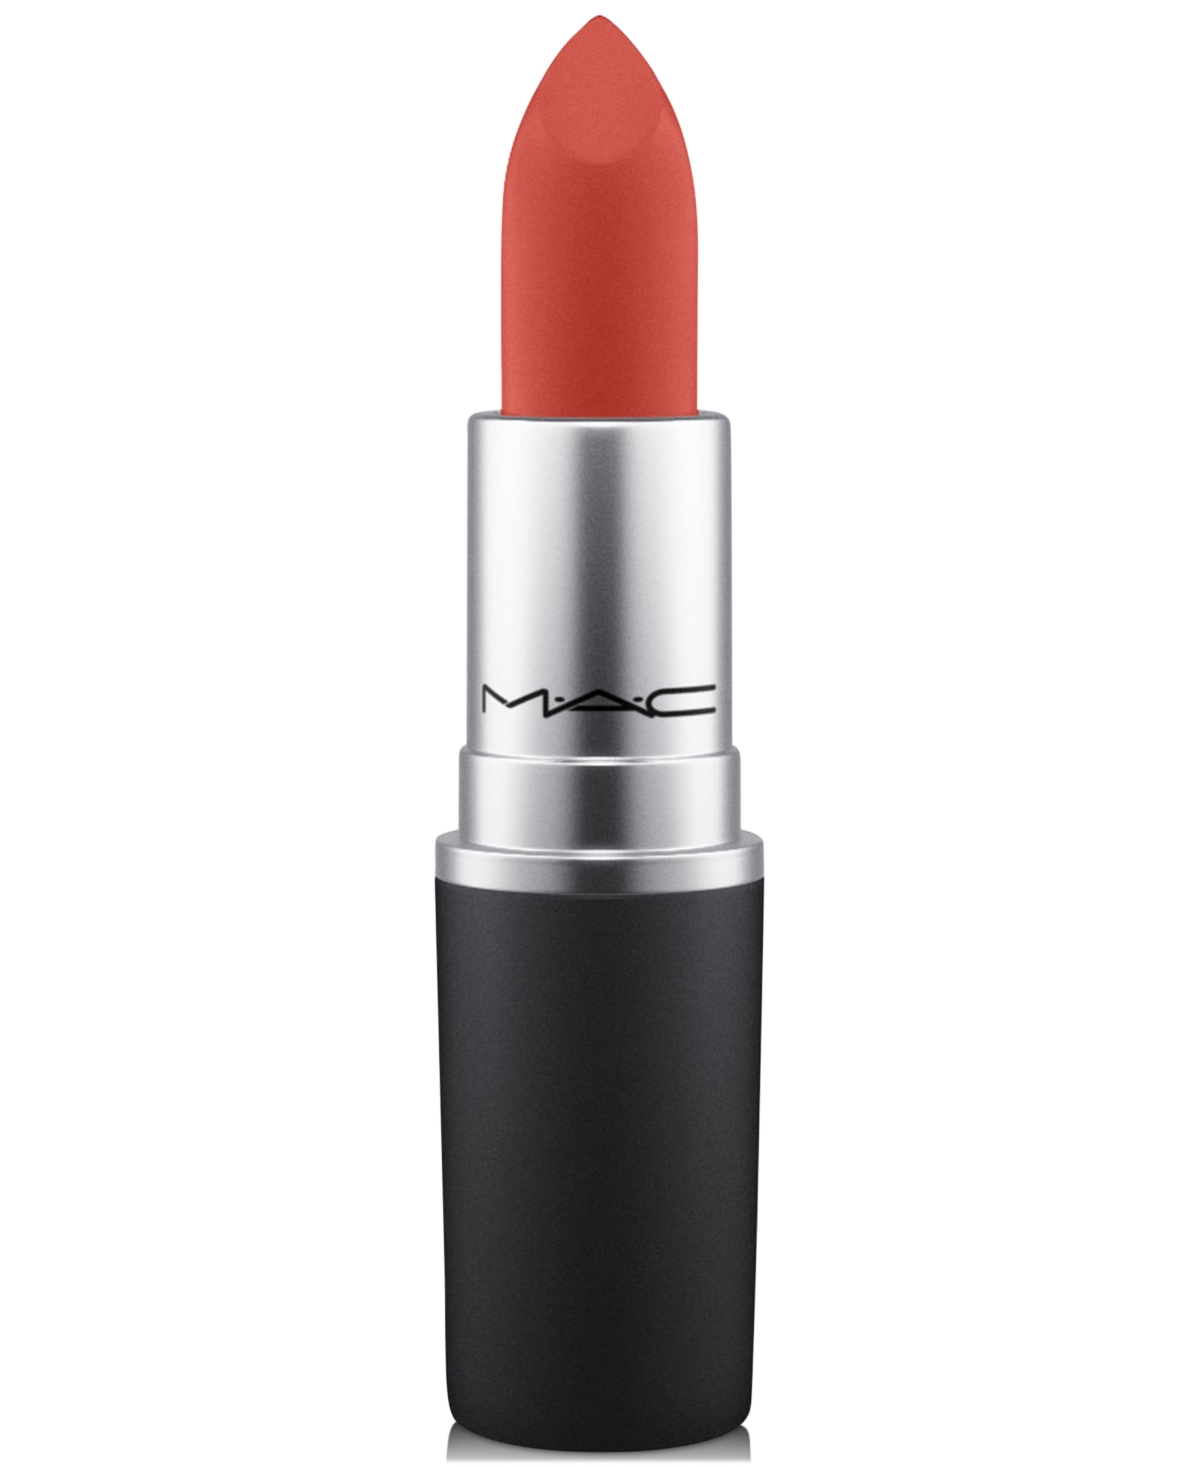 Mac Powder Kiss Lipstick In Devoted To Chili (warm Brick Red)